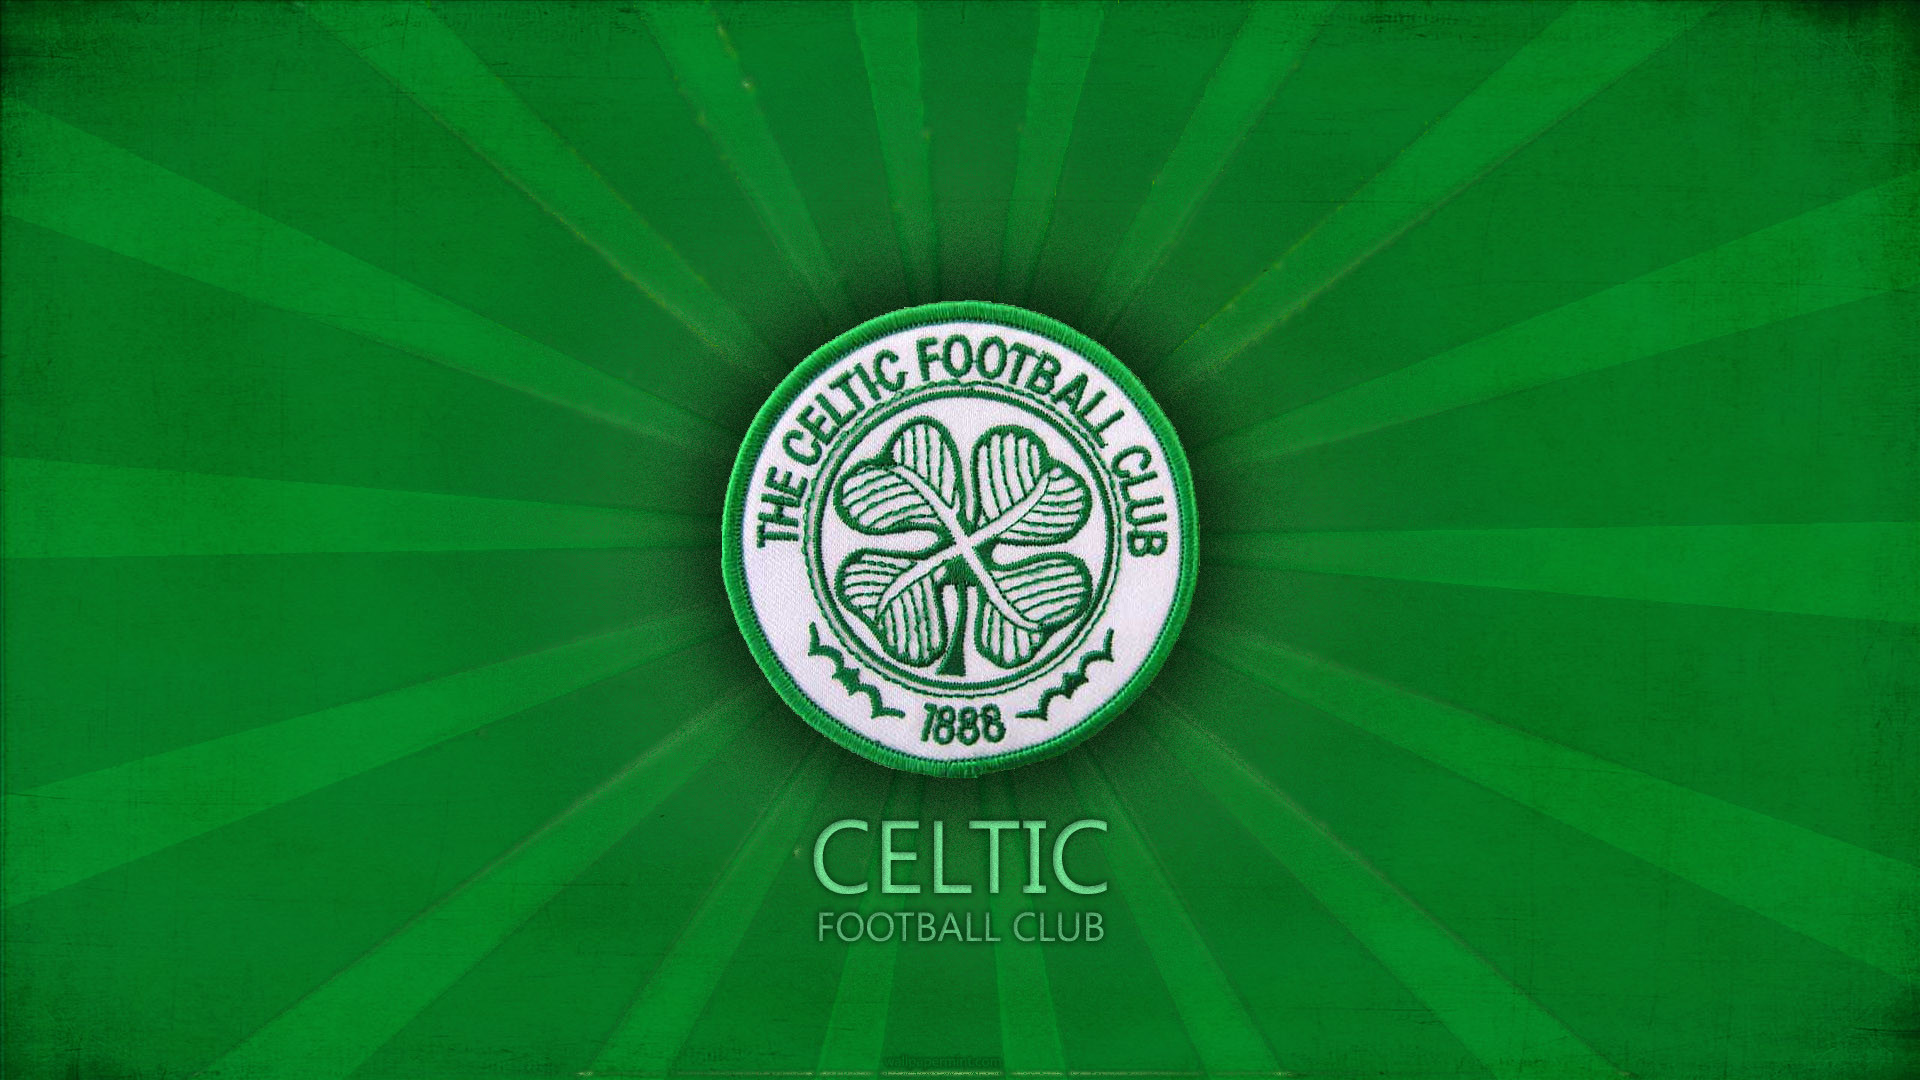 carta da parati celtica fc,verde,bandiera,emblema,simbolo,font